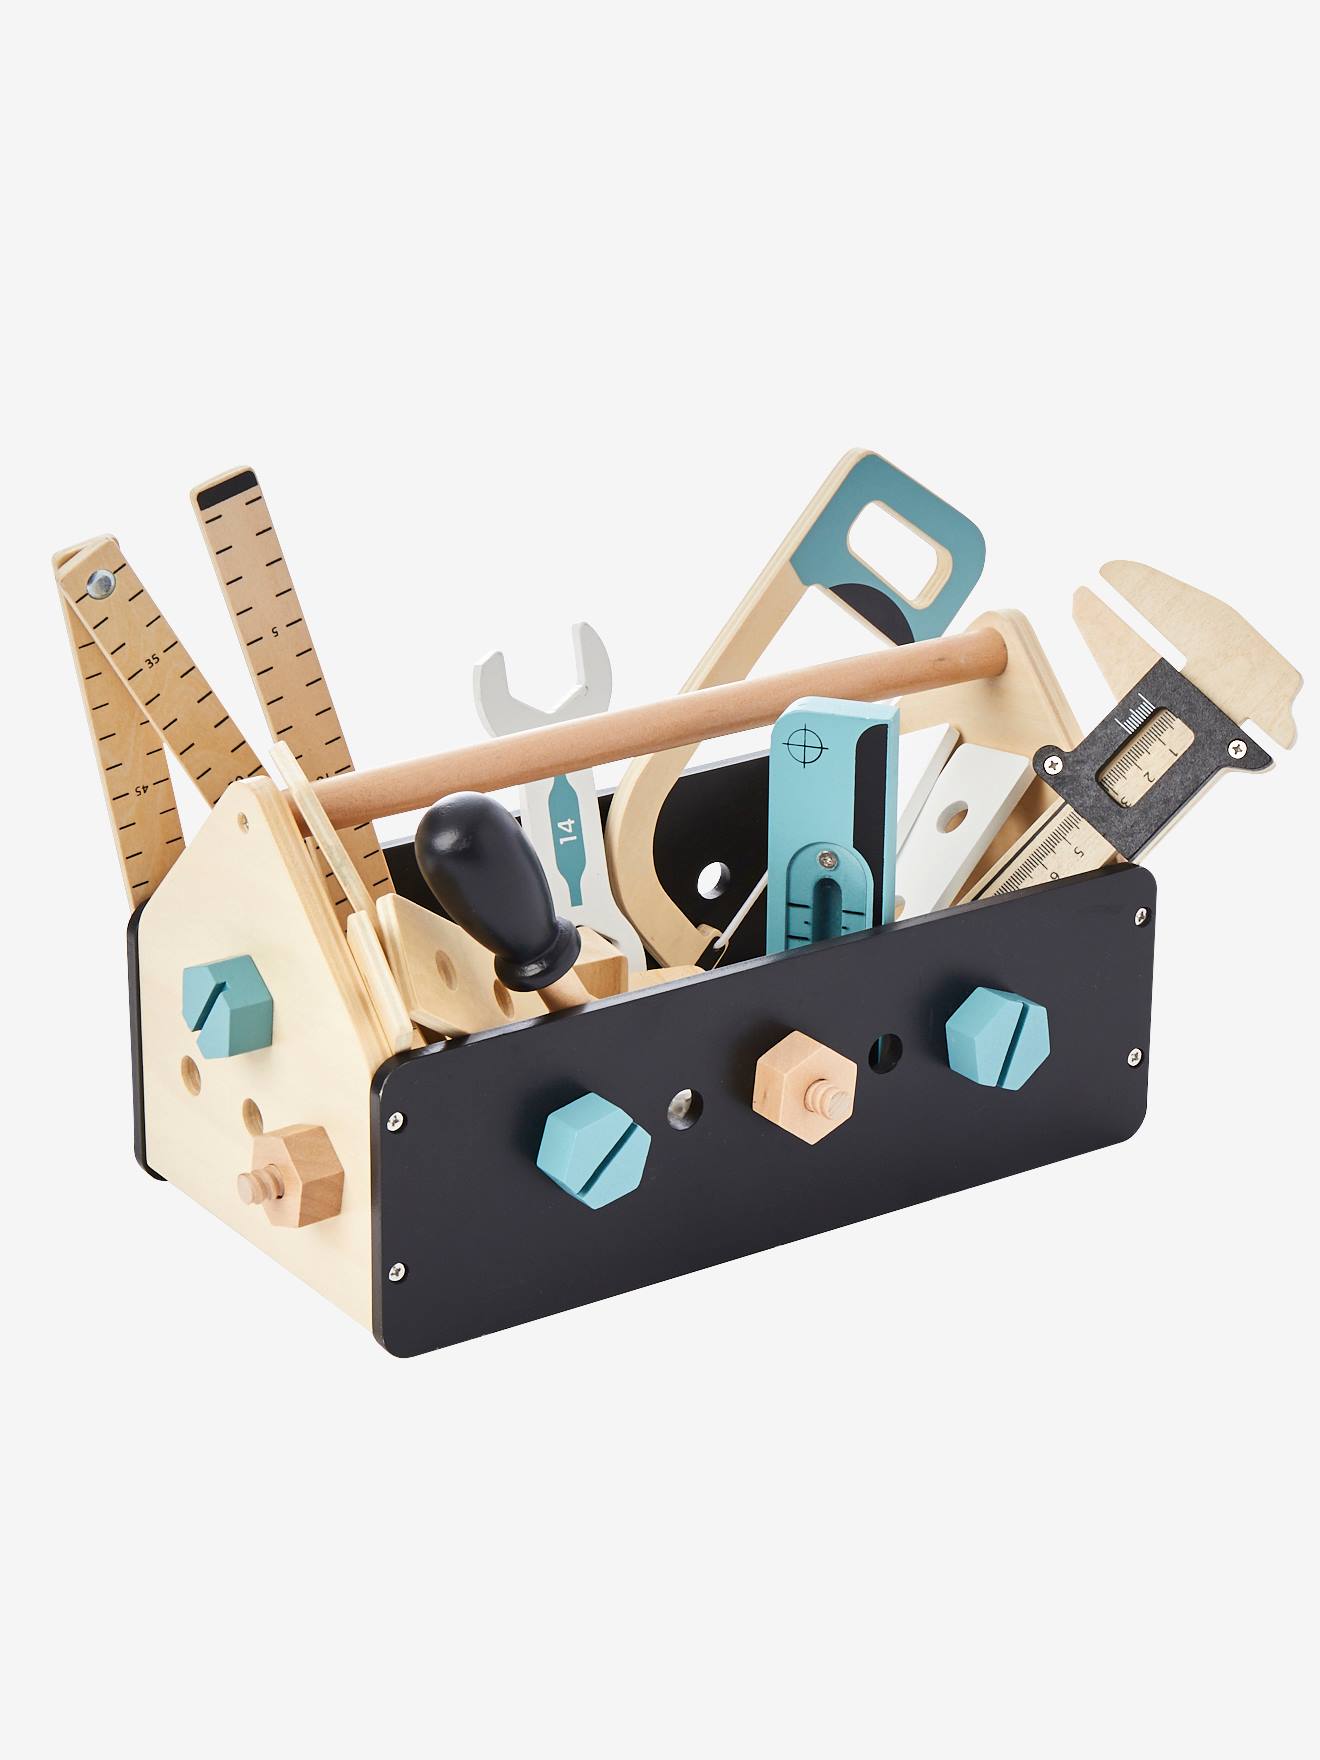 Boite a outils en bois, jouets en bois